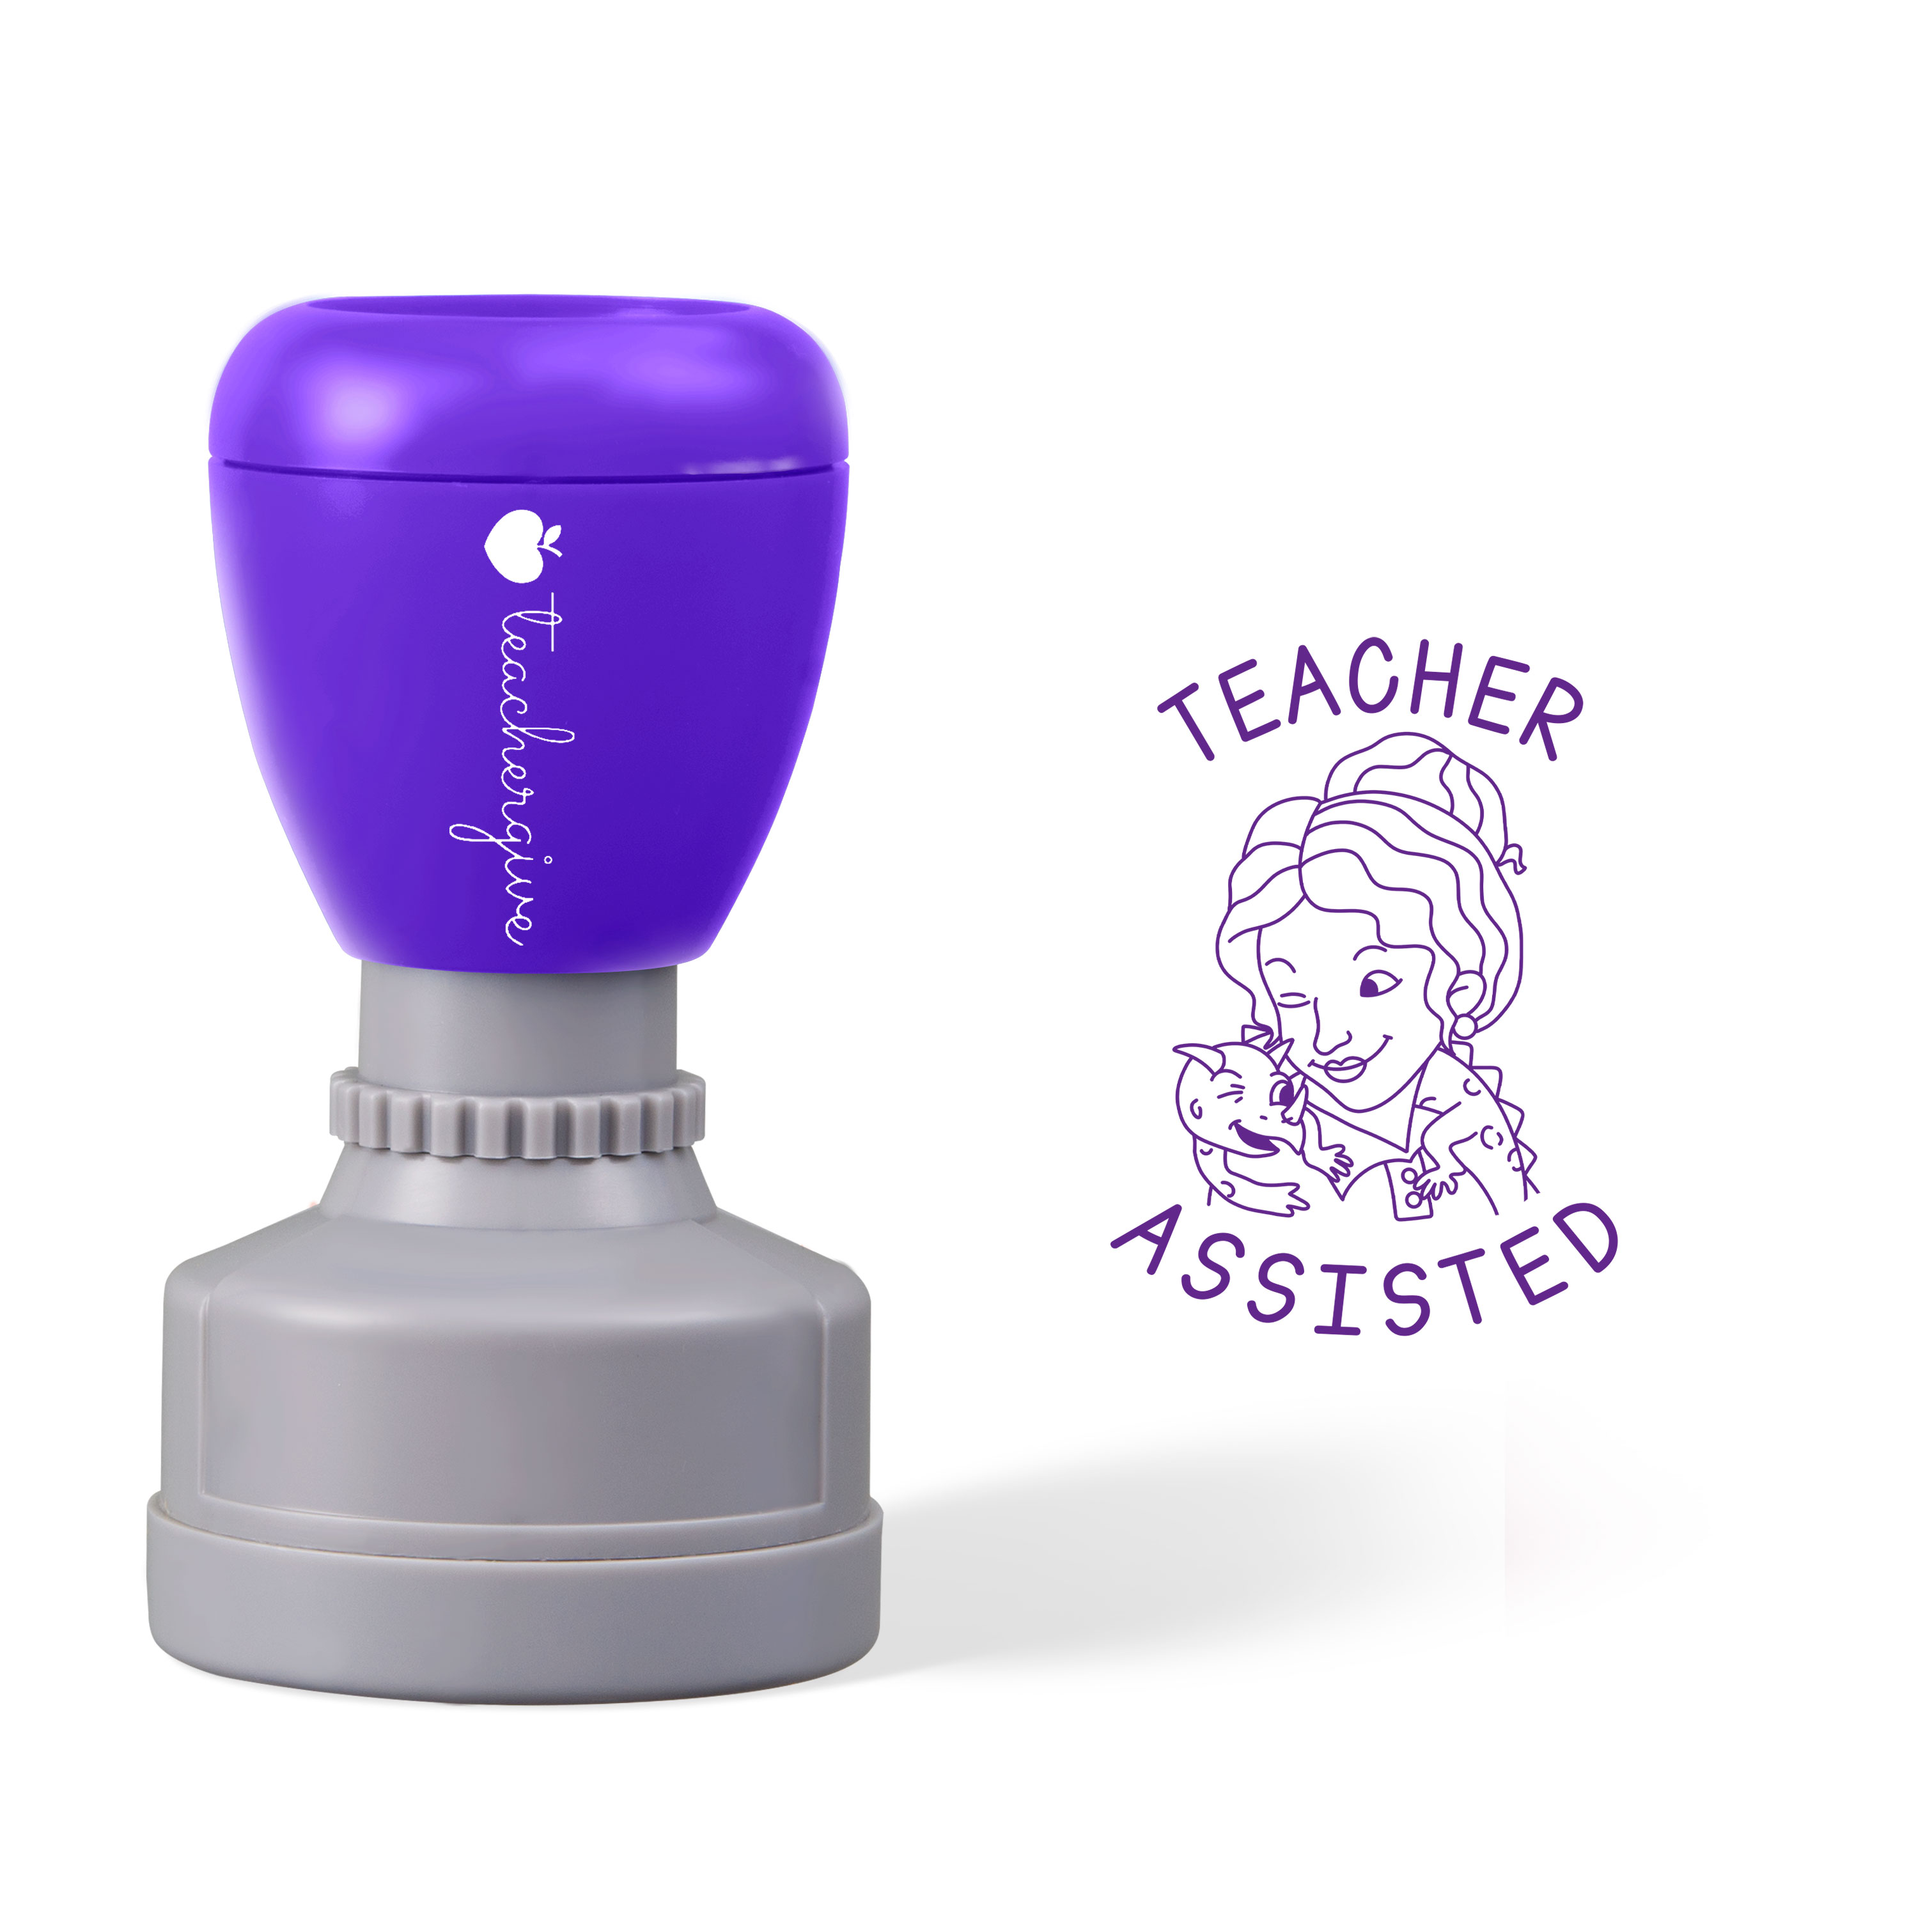 Magic Teacher Assisted Teacher Stamp